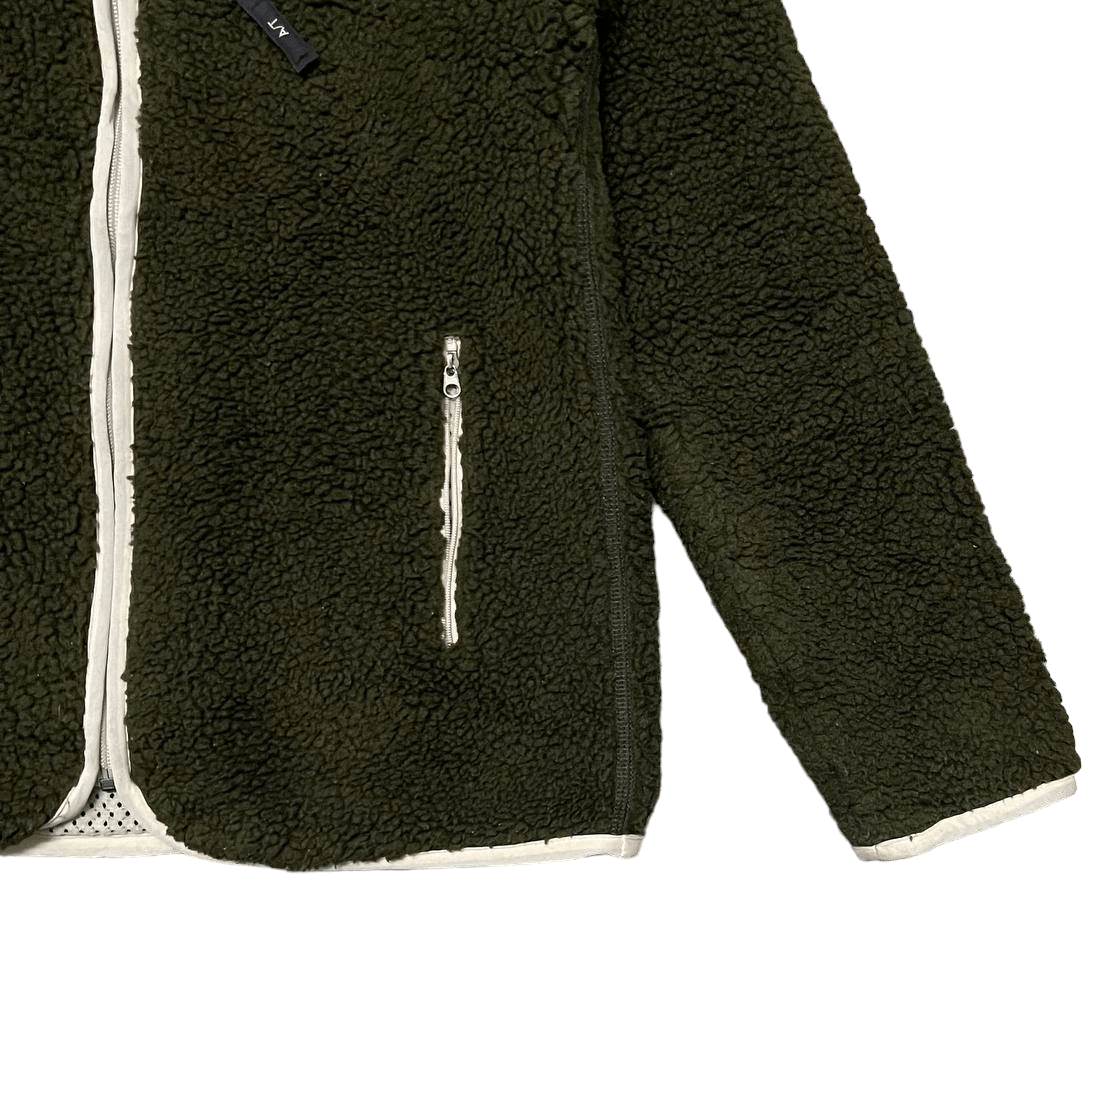 A/T Atsuro Tayama Pile Poil Fleece Jacket - 4